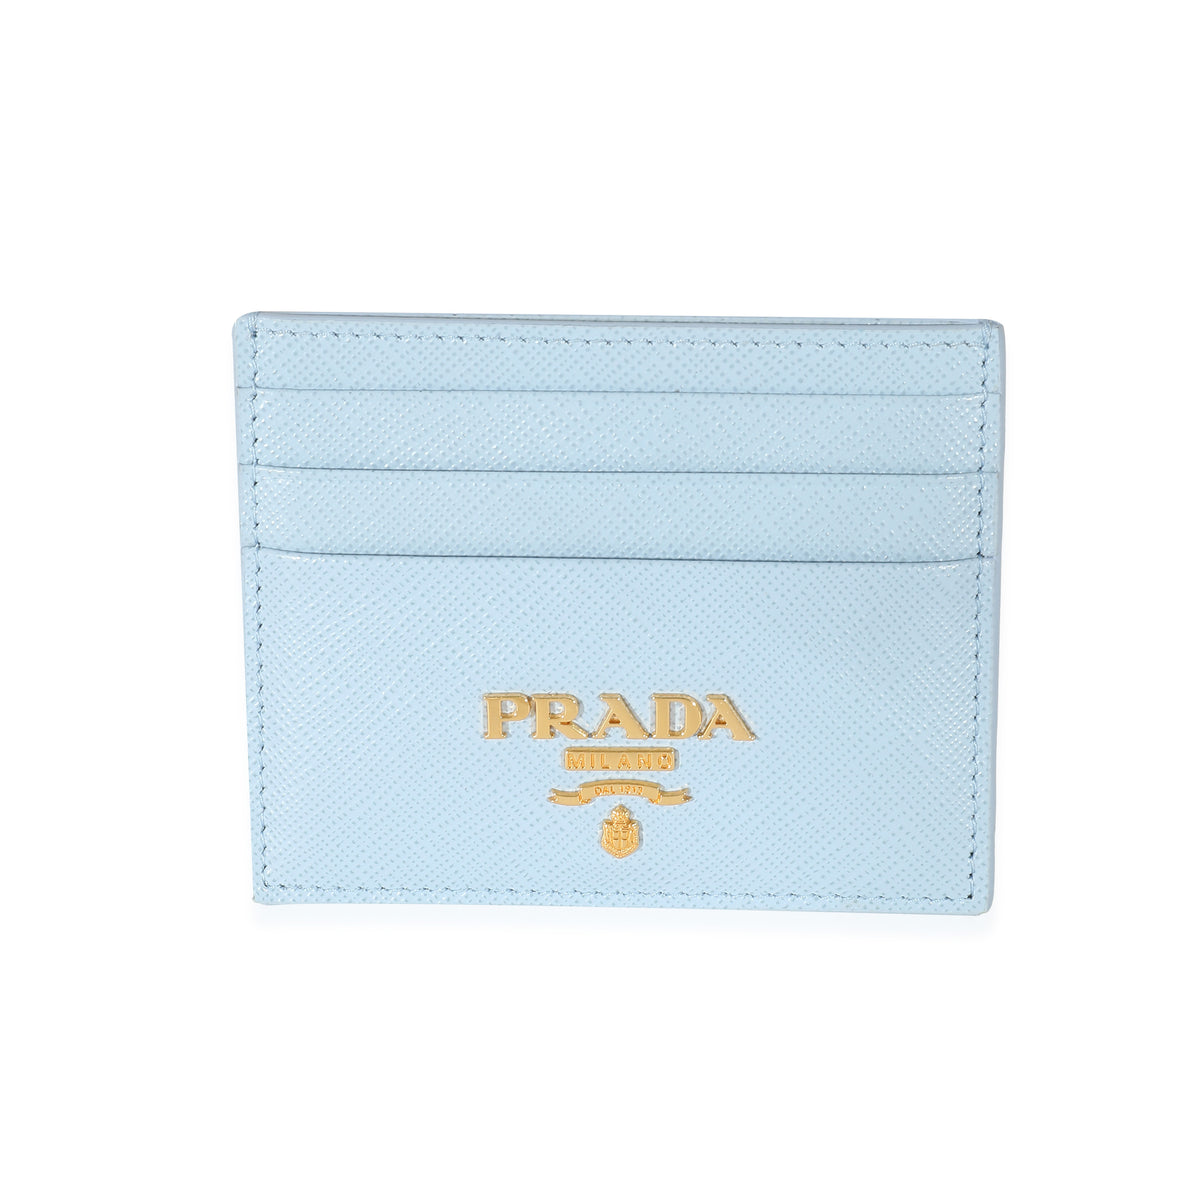 Saffiano leather card holder PRADA